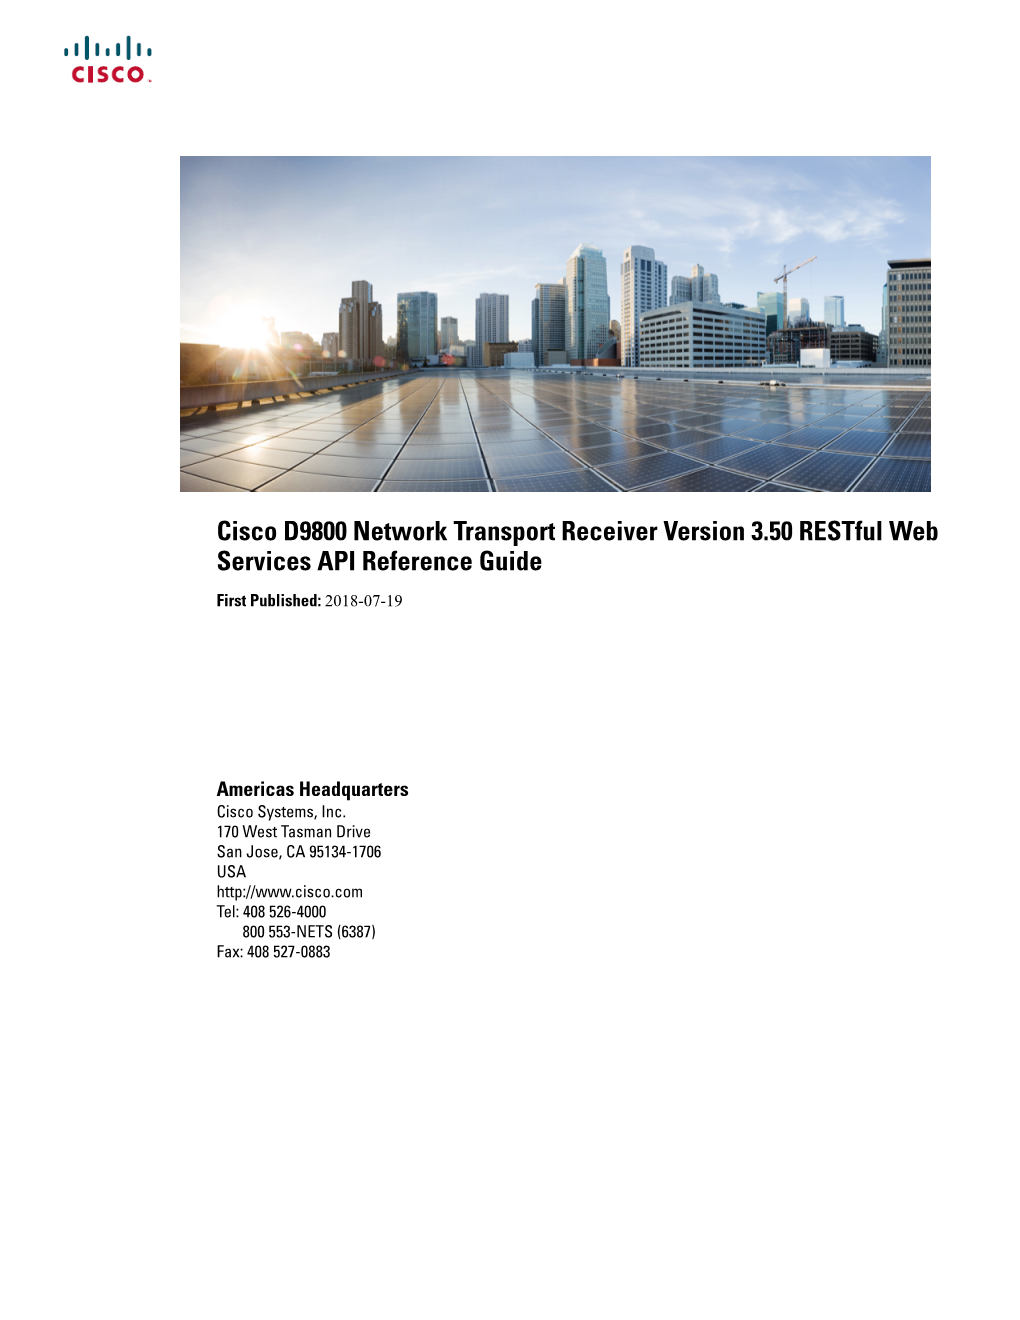 Cisco D9800 Network Transport Receiver Version 3.50 Restful Web Services API Reference Guide